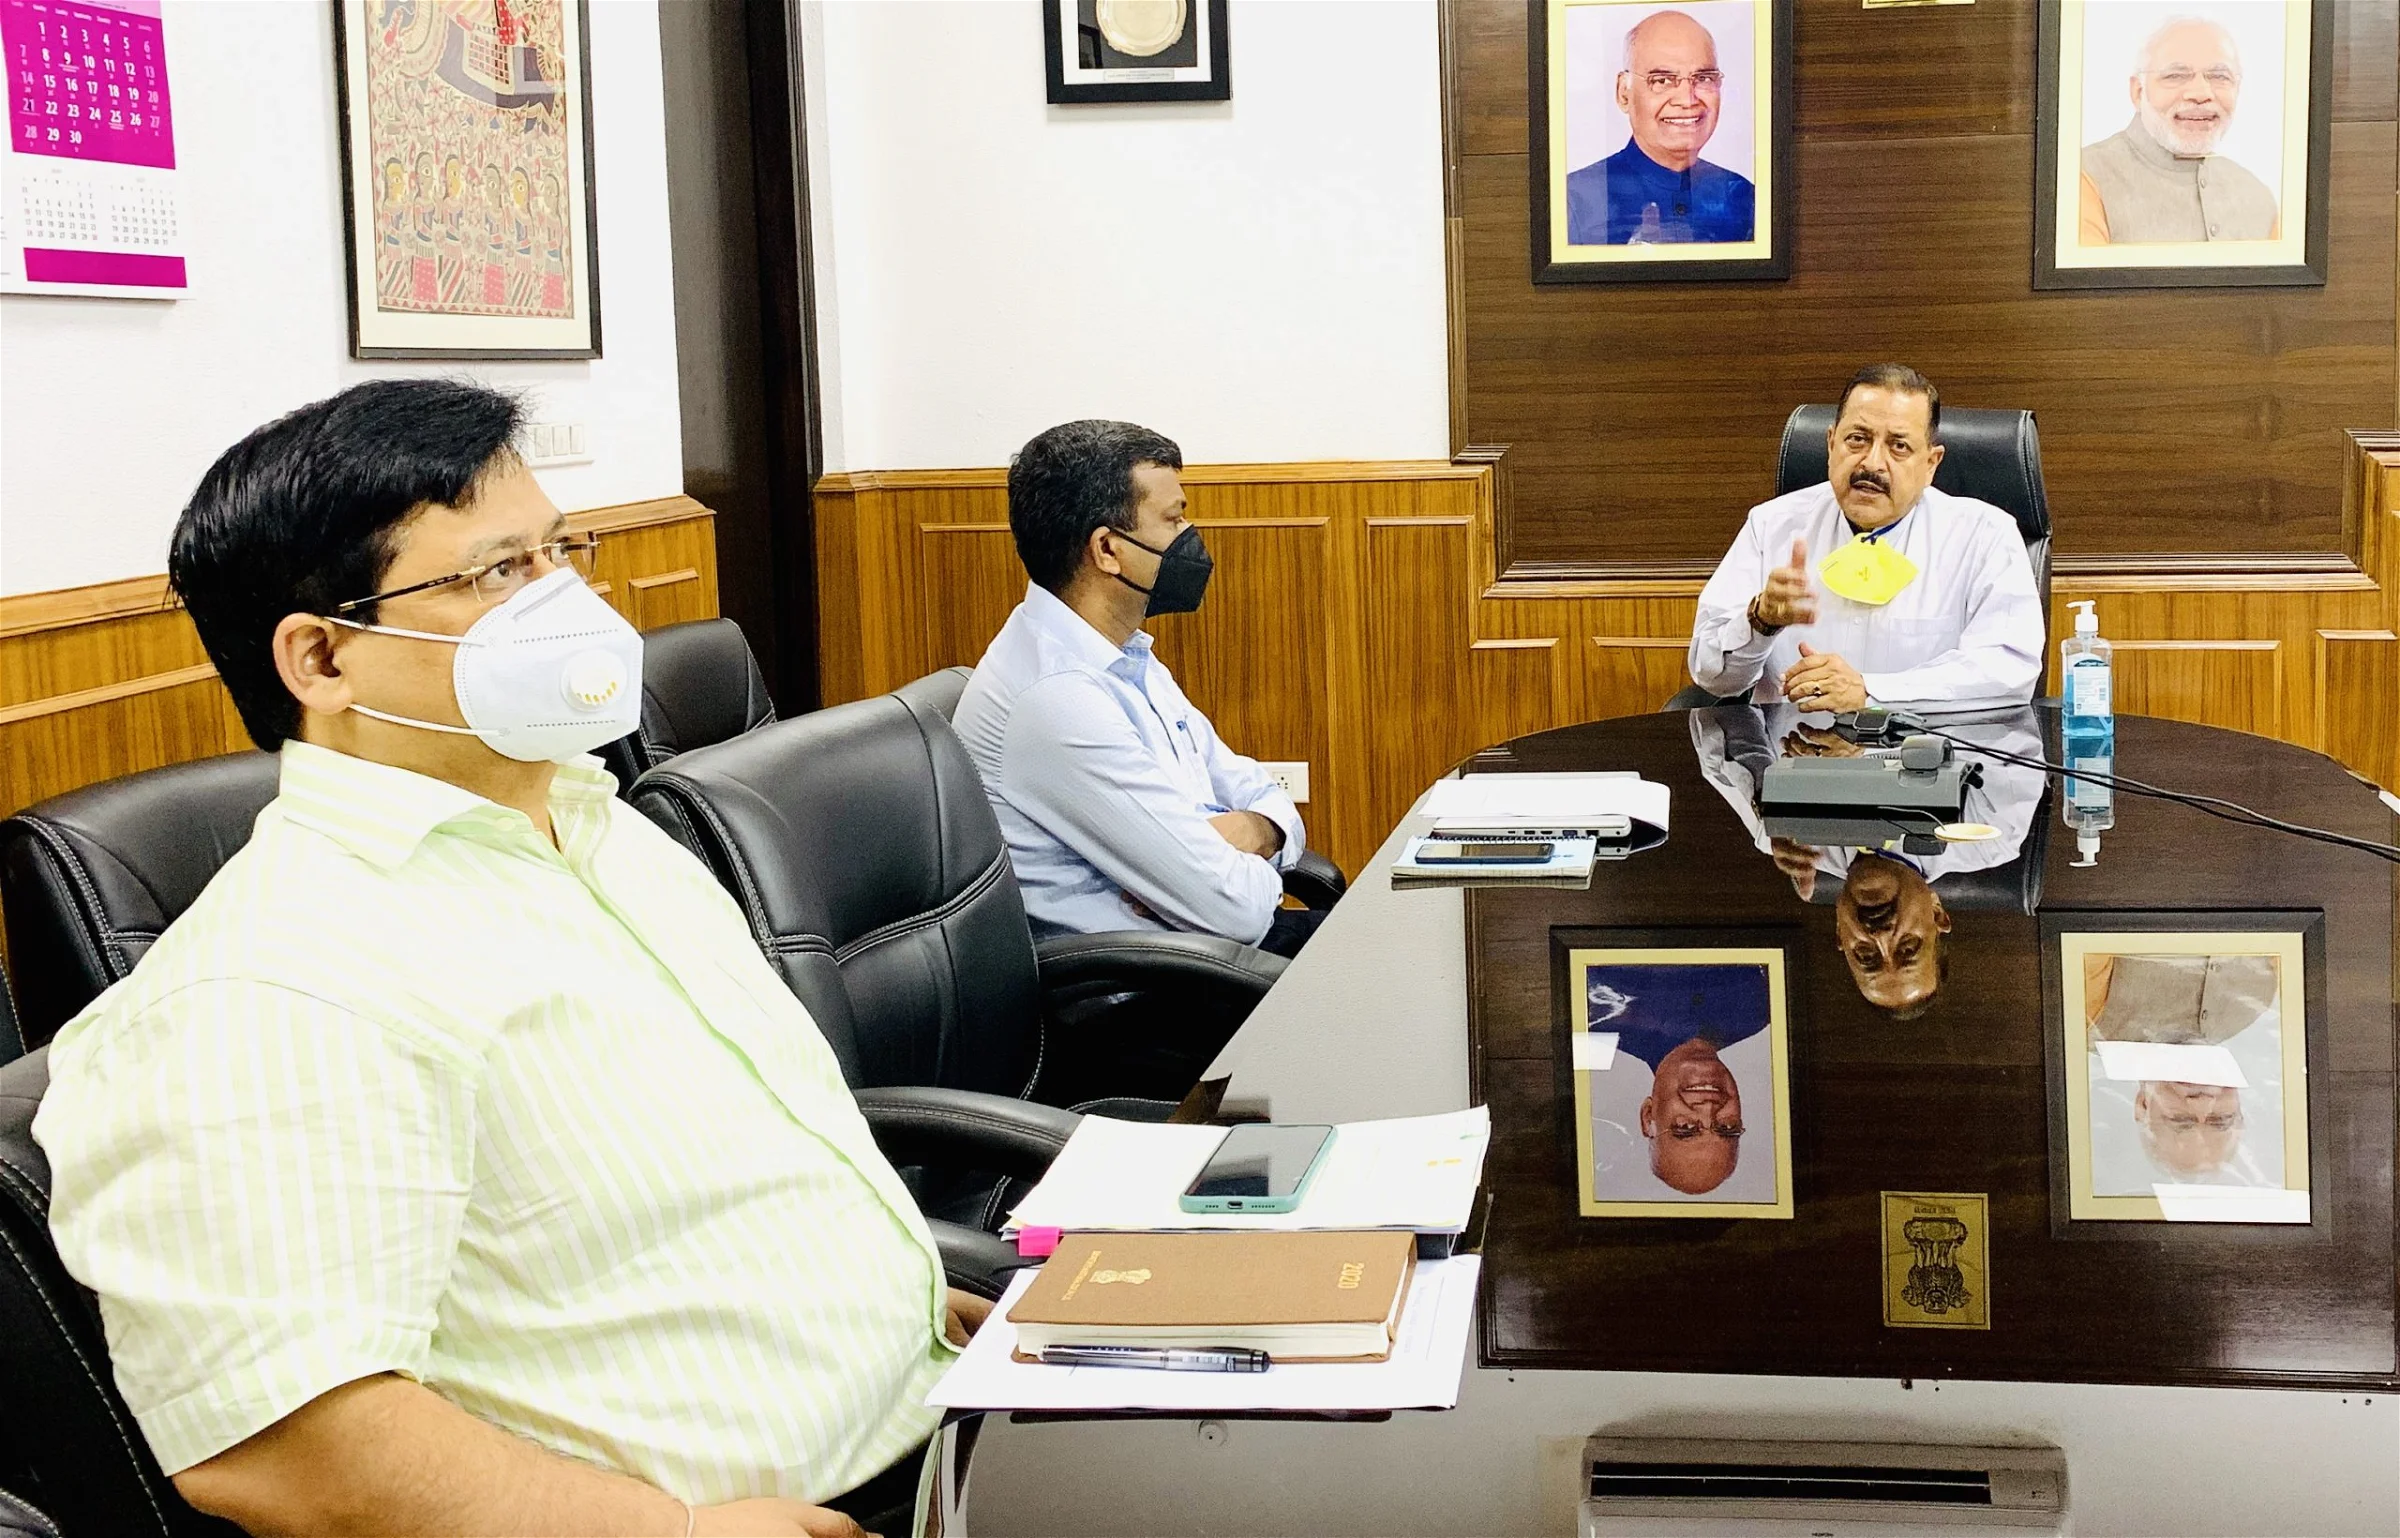 The preparatory meeting was attended by Dr. K.Shivaji, Secretary DARPG, V.Srinivas Additional Secretary DARPG, Smt. Jaya Dubey Joint Secretary DARPG and Chairman and Managing Director BSNL Shri P.K.Purwar.